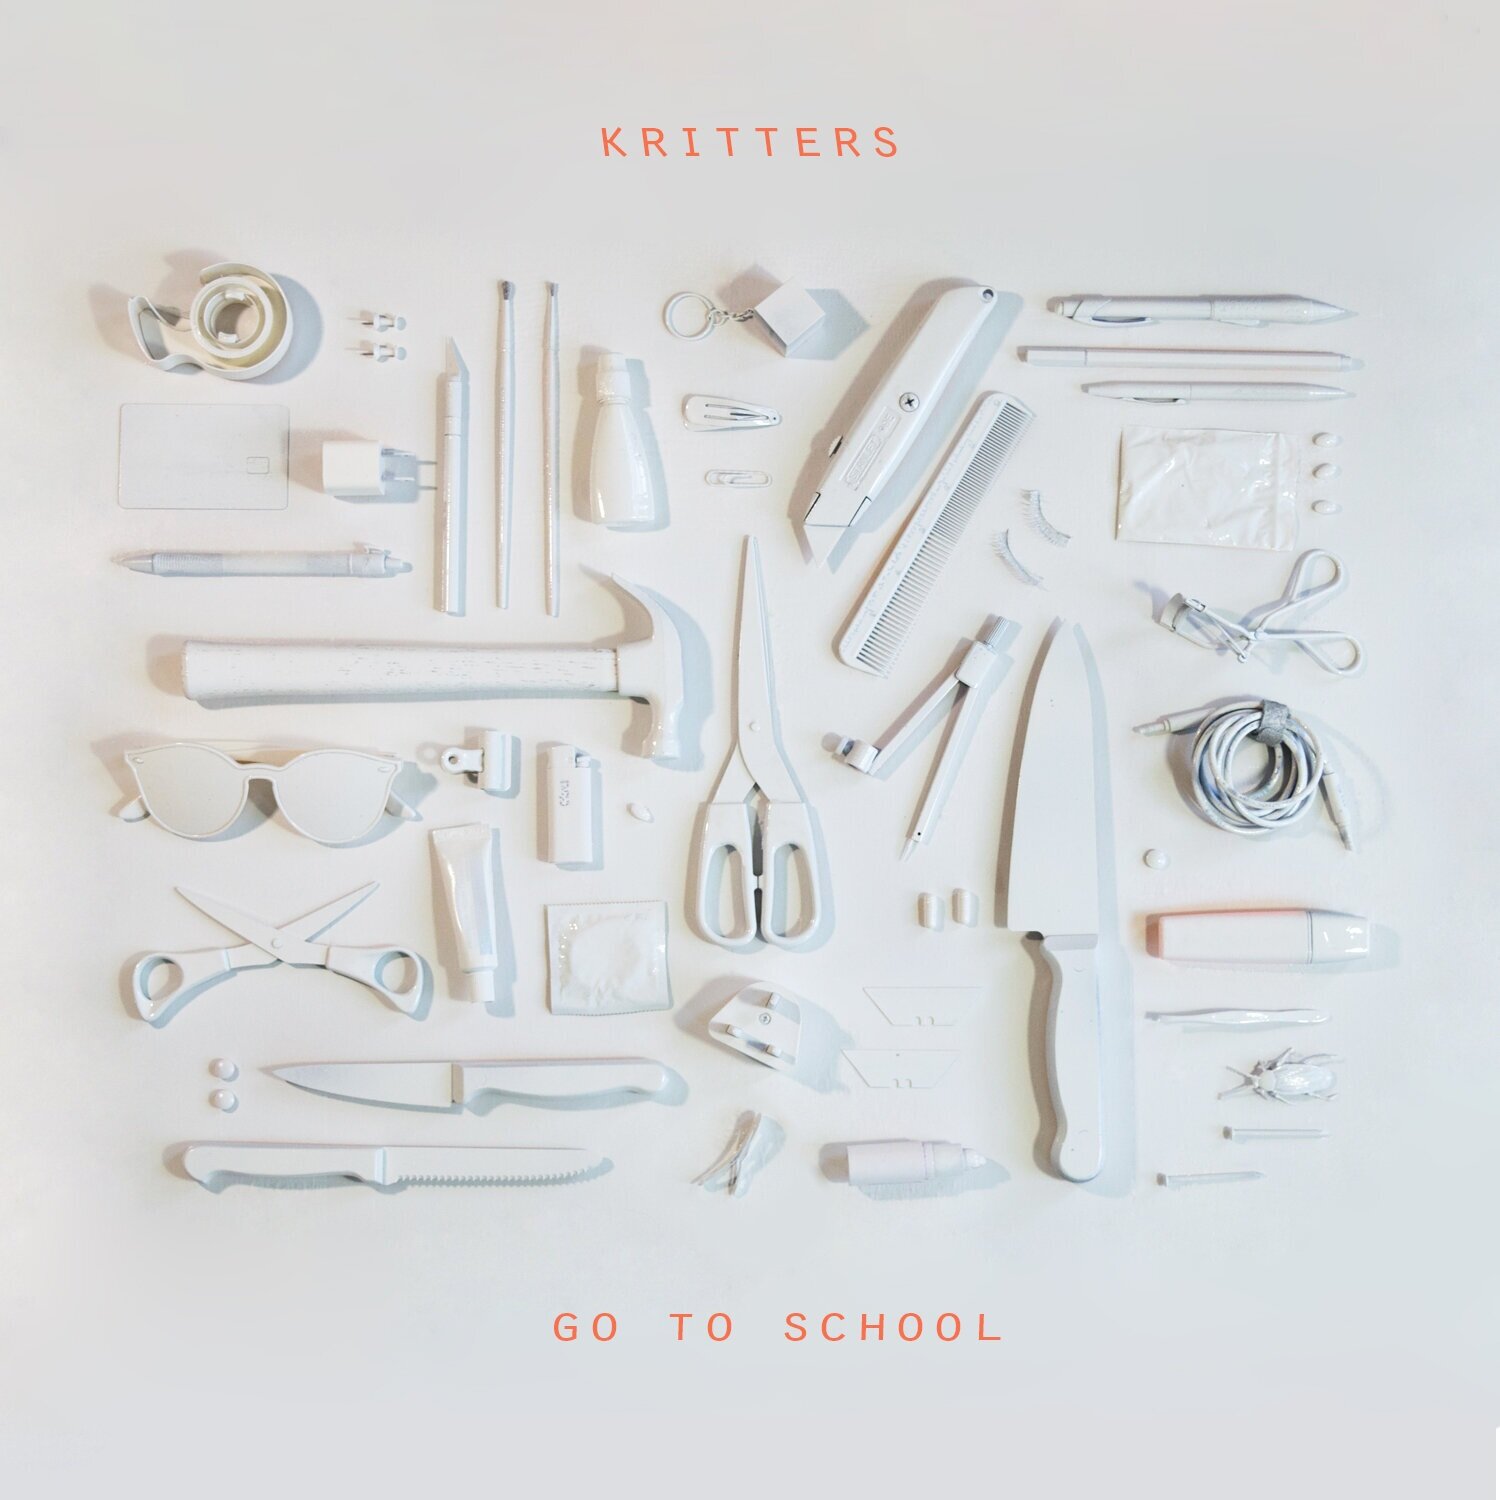 Kritters - Go to school